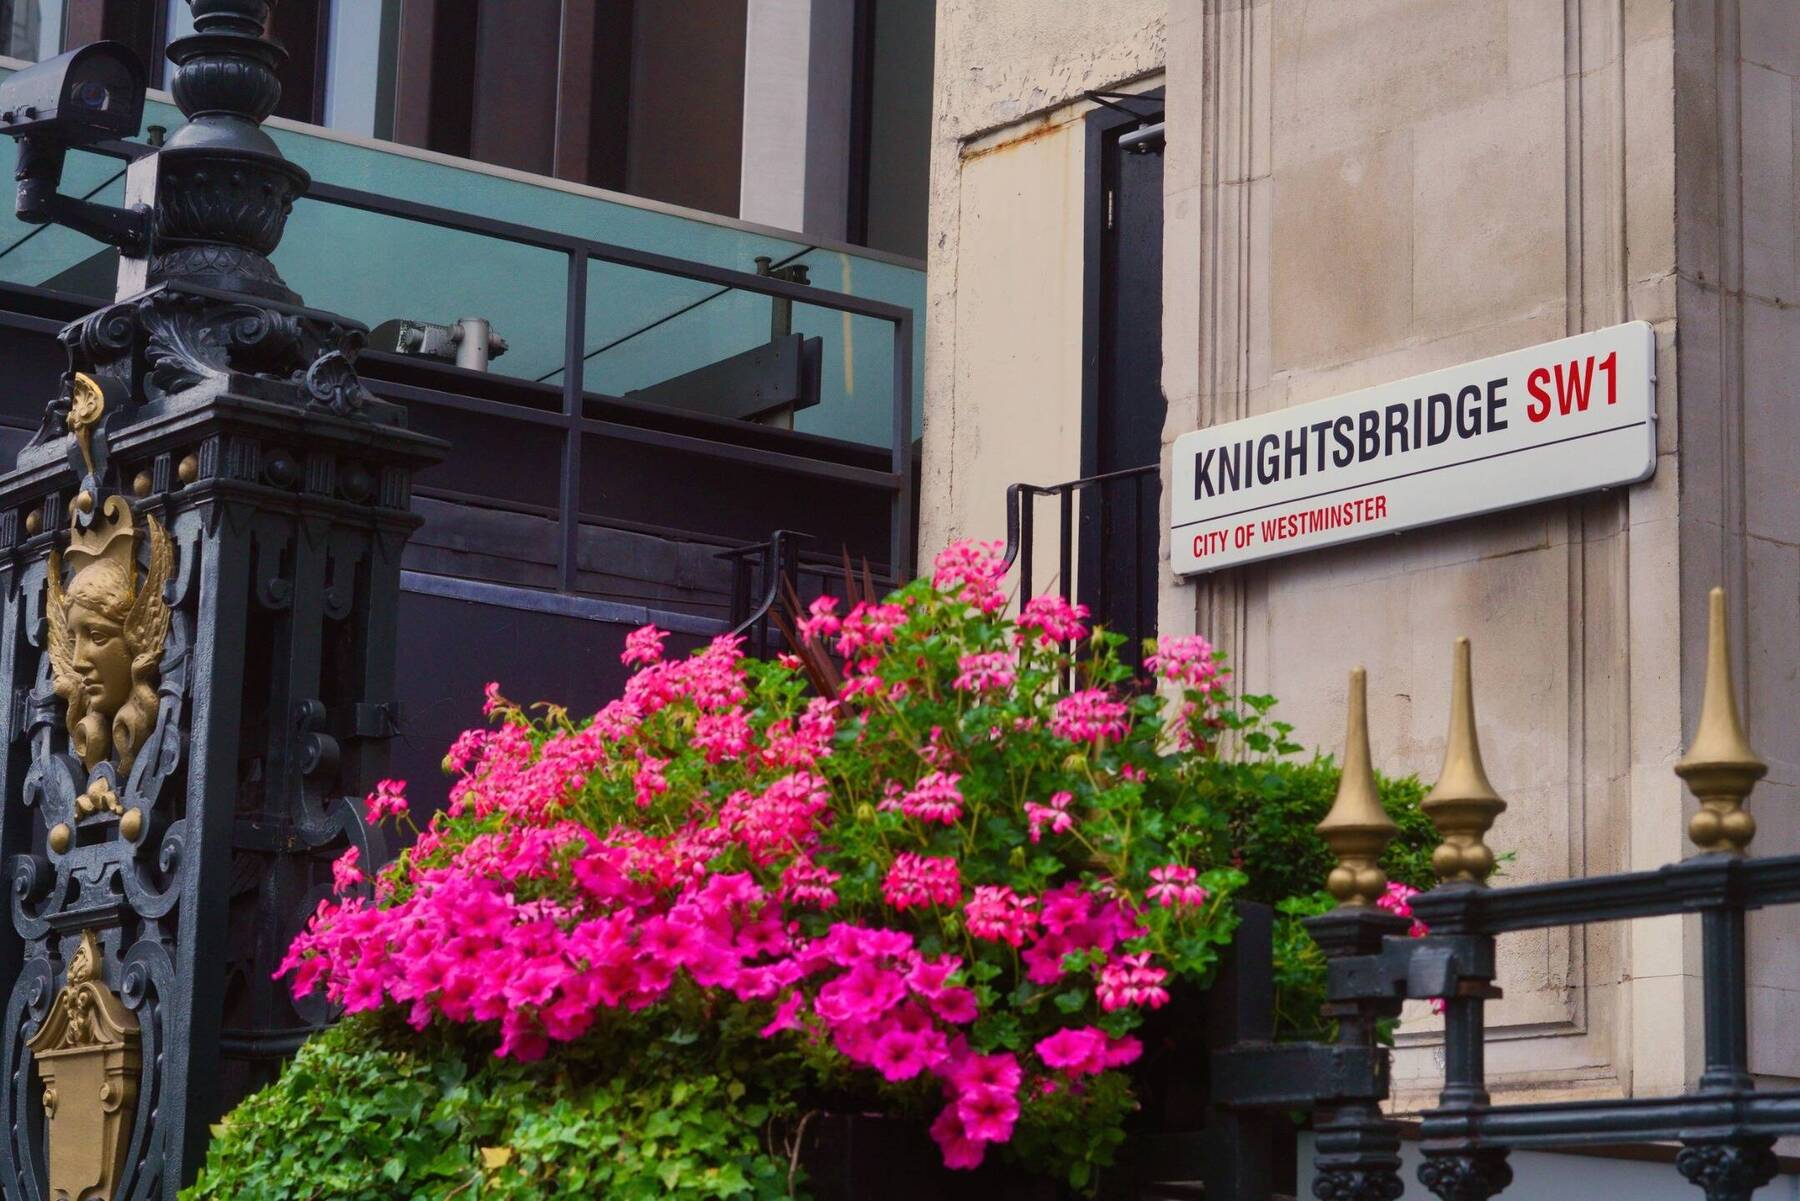 Discover the hidden gems of Knightsbridge, London